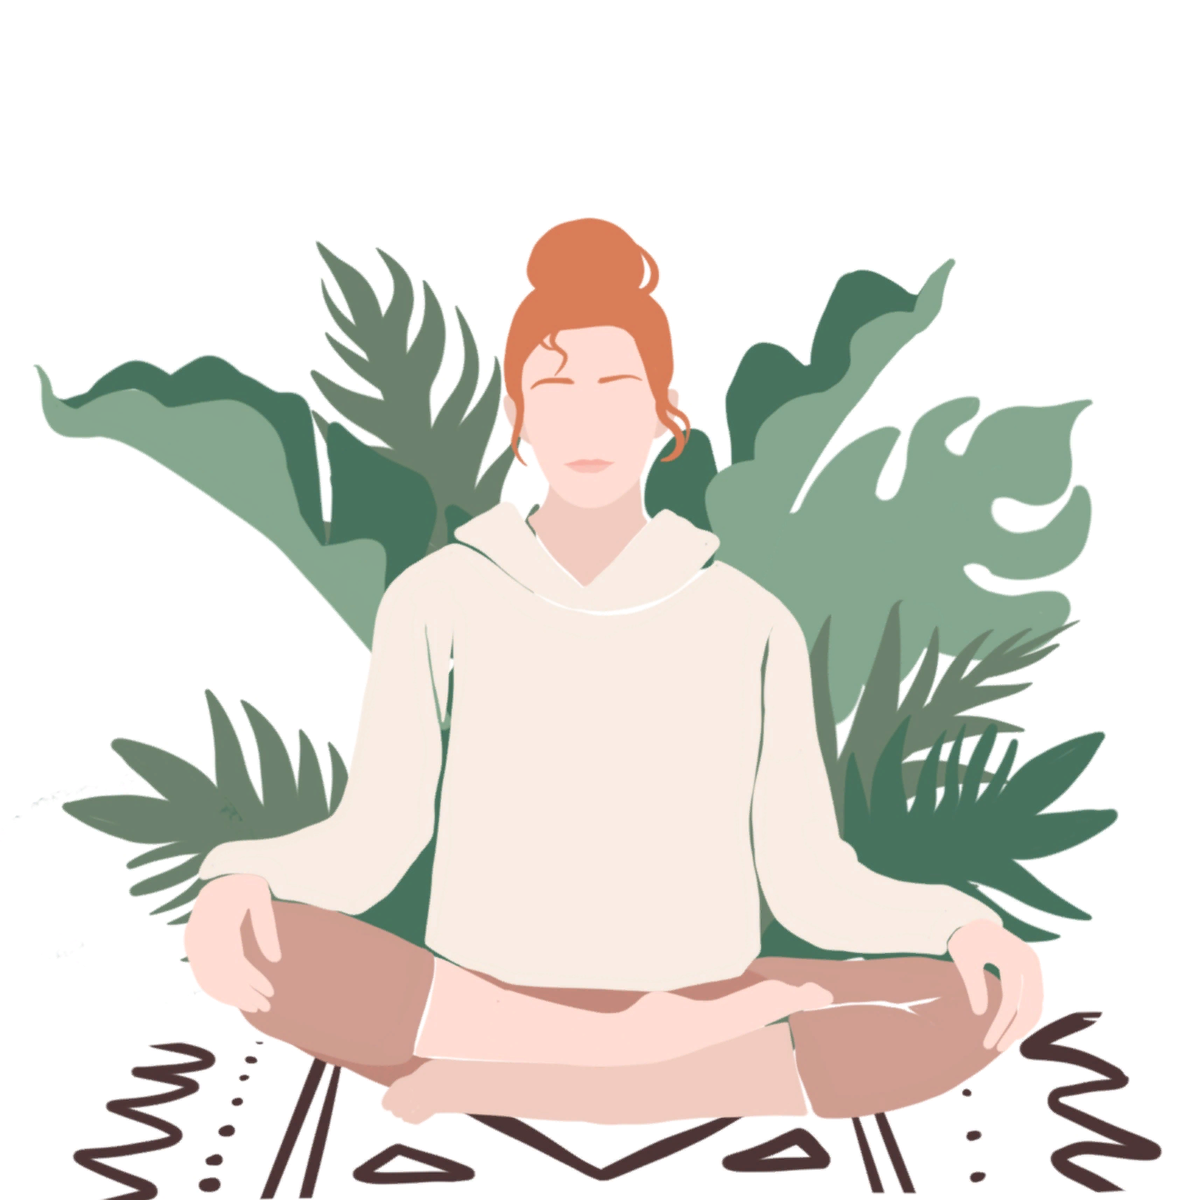 Т медитация. Медитация. Медитация на белом фоне. Медитация иллюстрация. Медитирующий человек.